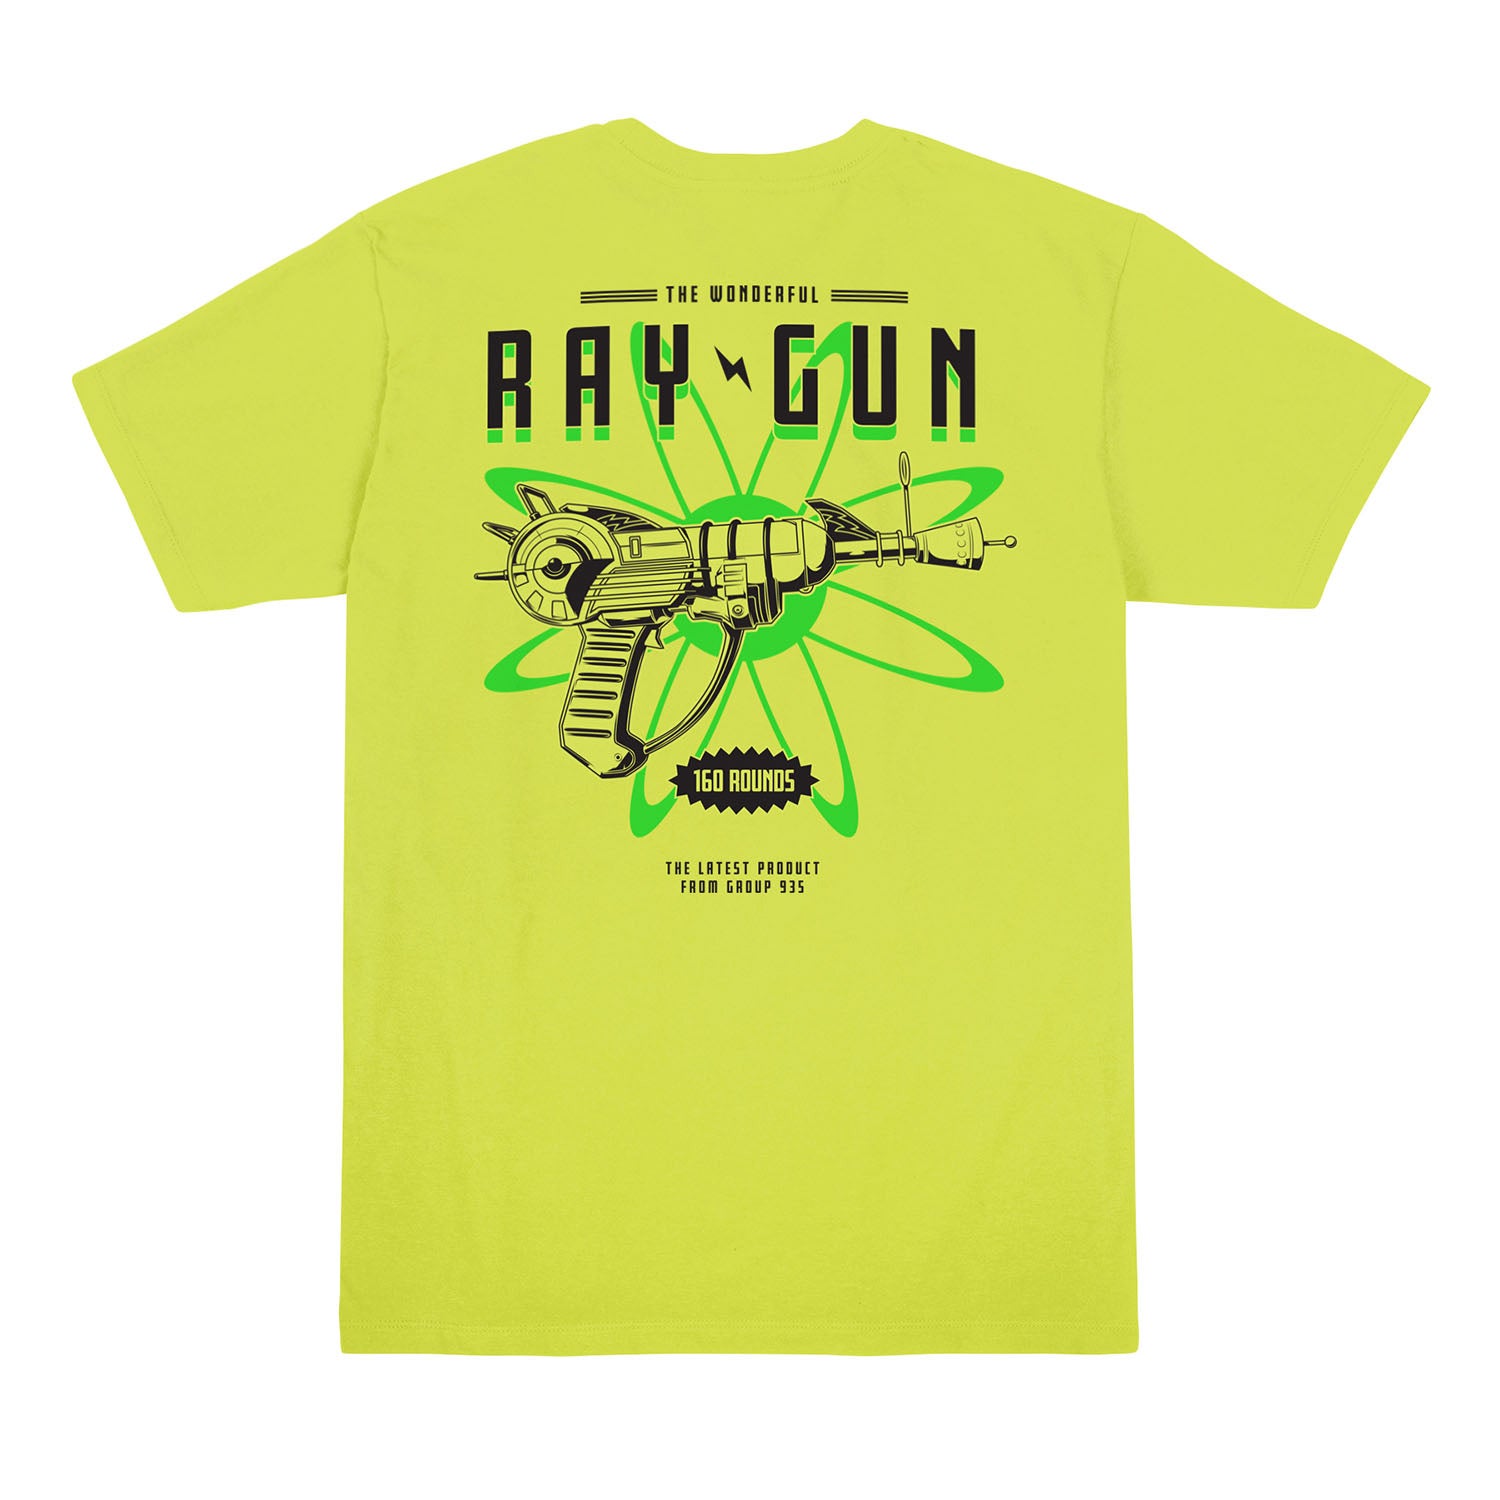 Call of Duty Ray Gun Yellow T-Shirt - Back View